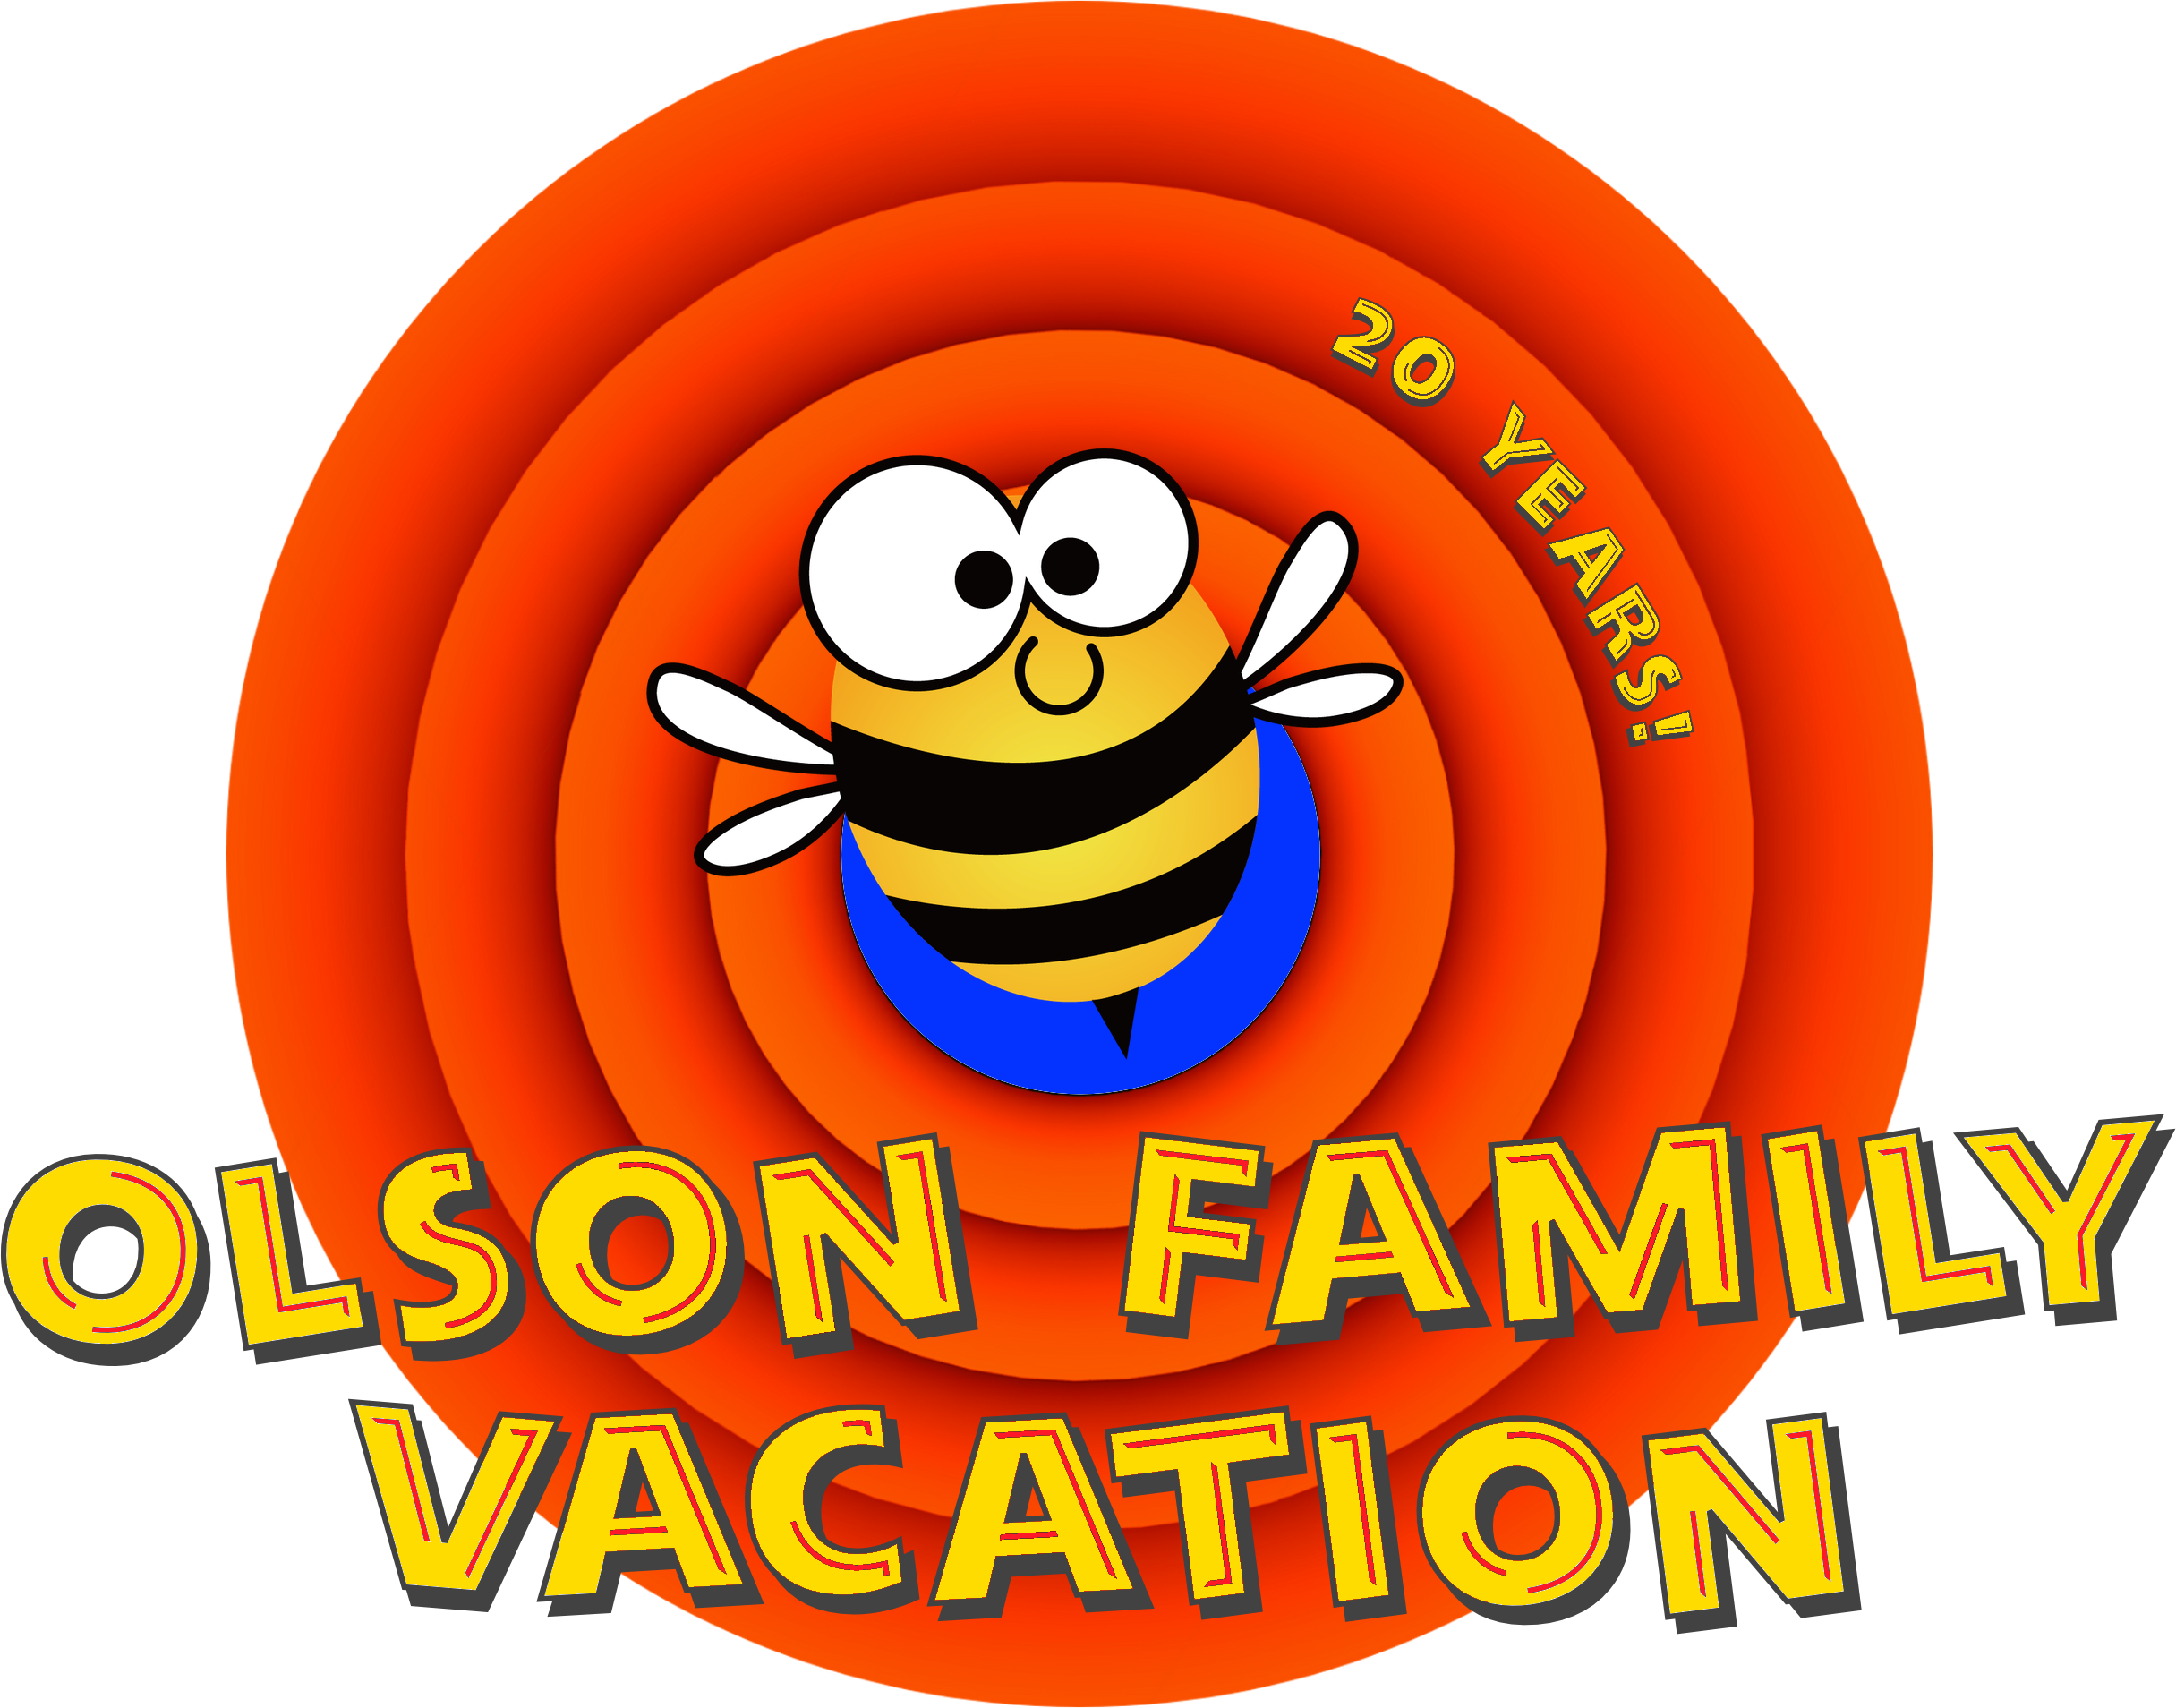 Olson Family Vacation 20 Years